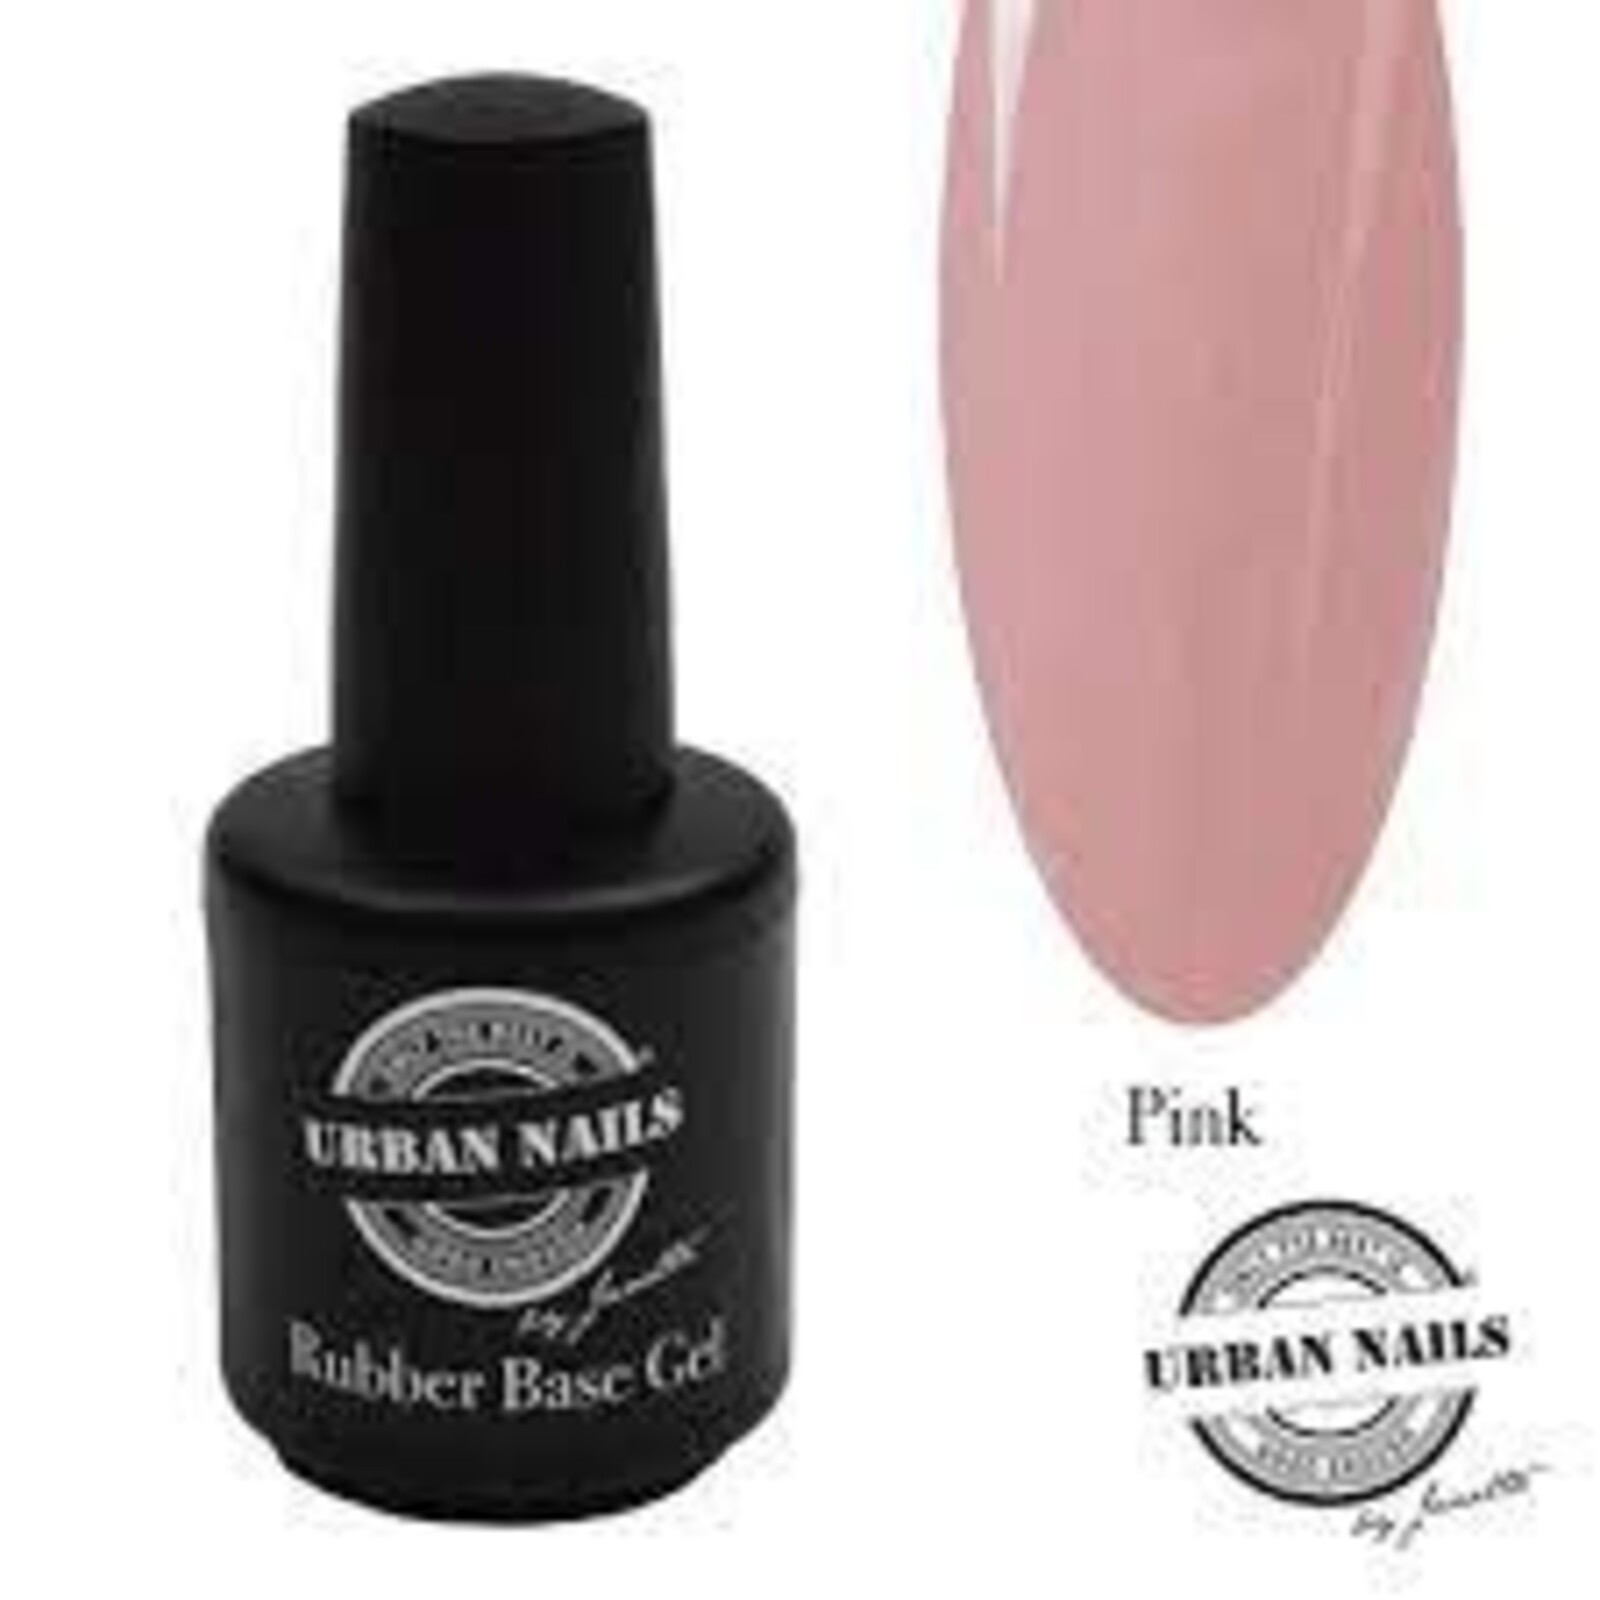 Urban nails Rubber Base Gel Pink